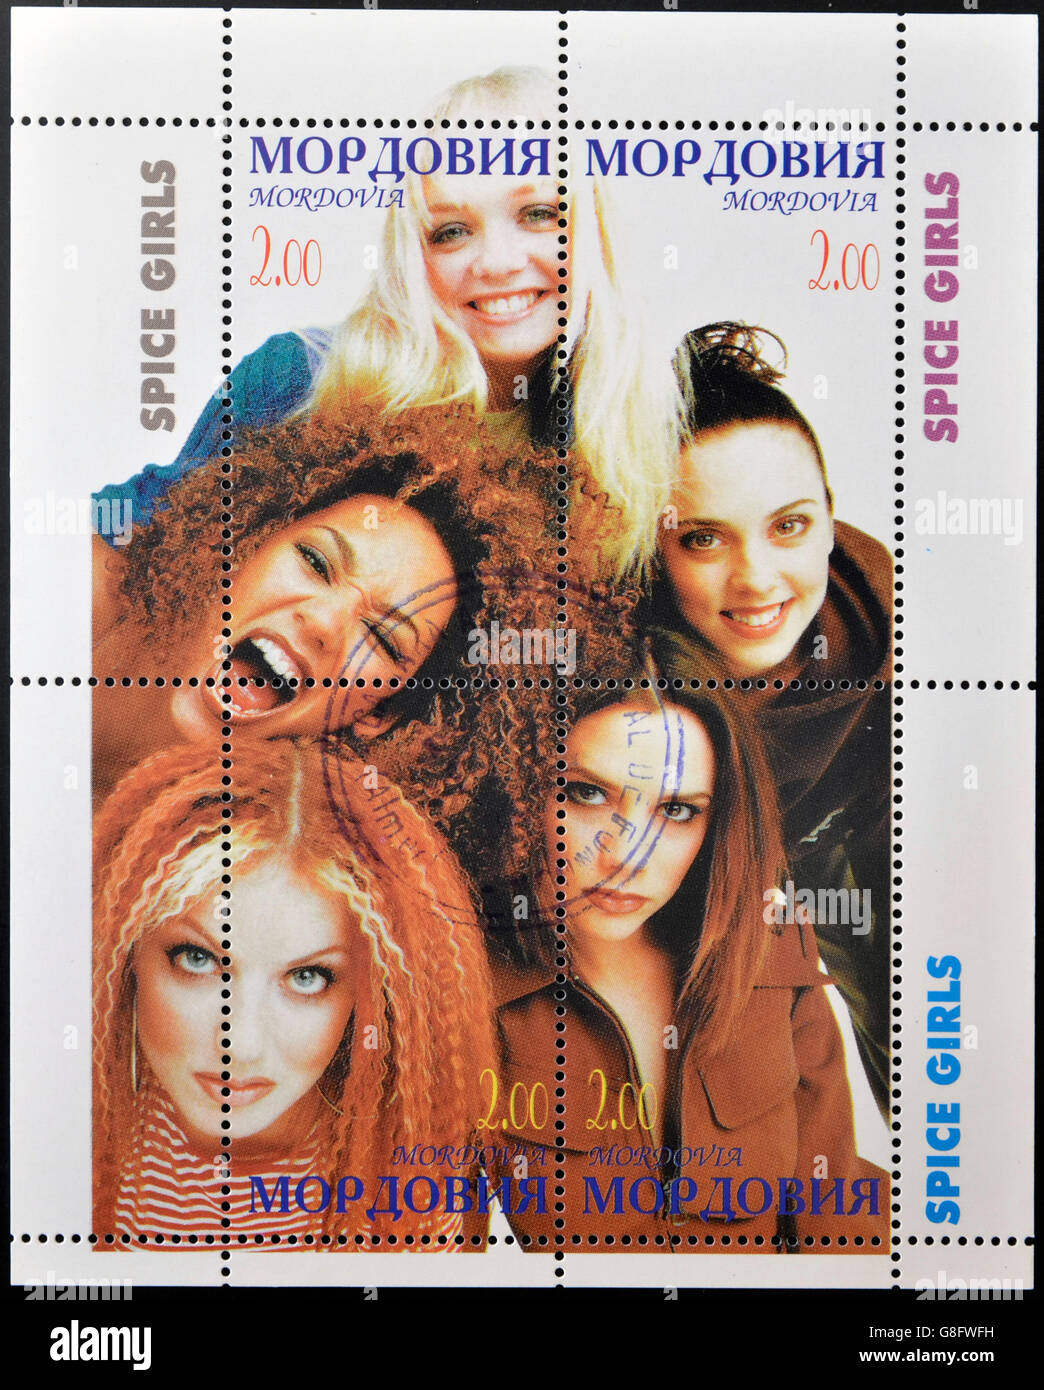 MOLDOVA - CIRCA 2000: A stamp printed in Moldova shows spice girls, circa 2000 Stock Photo